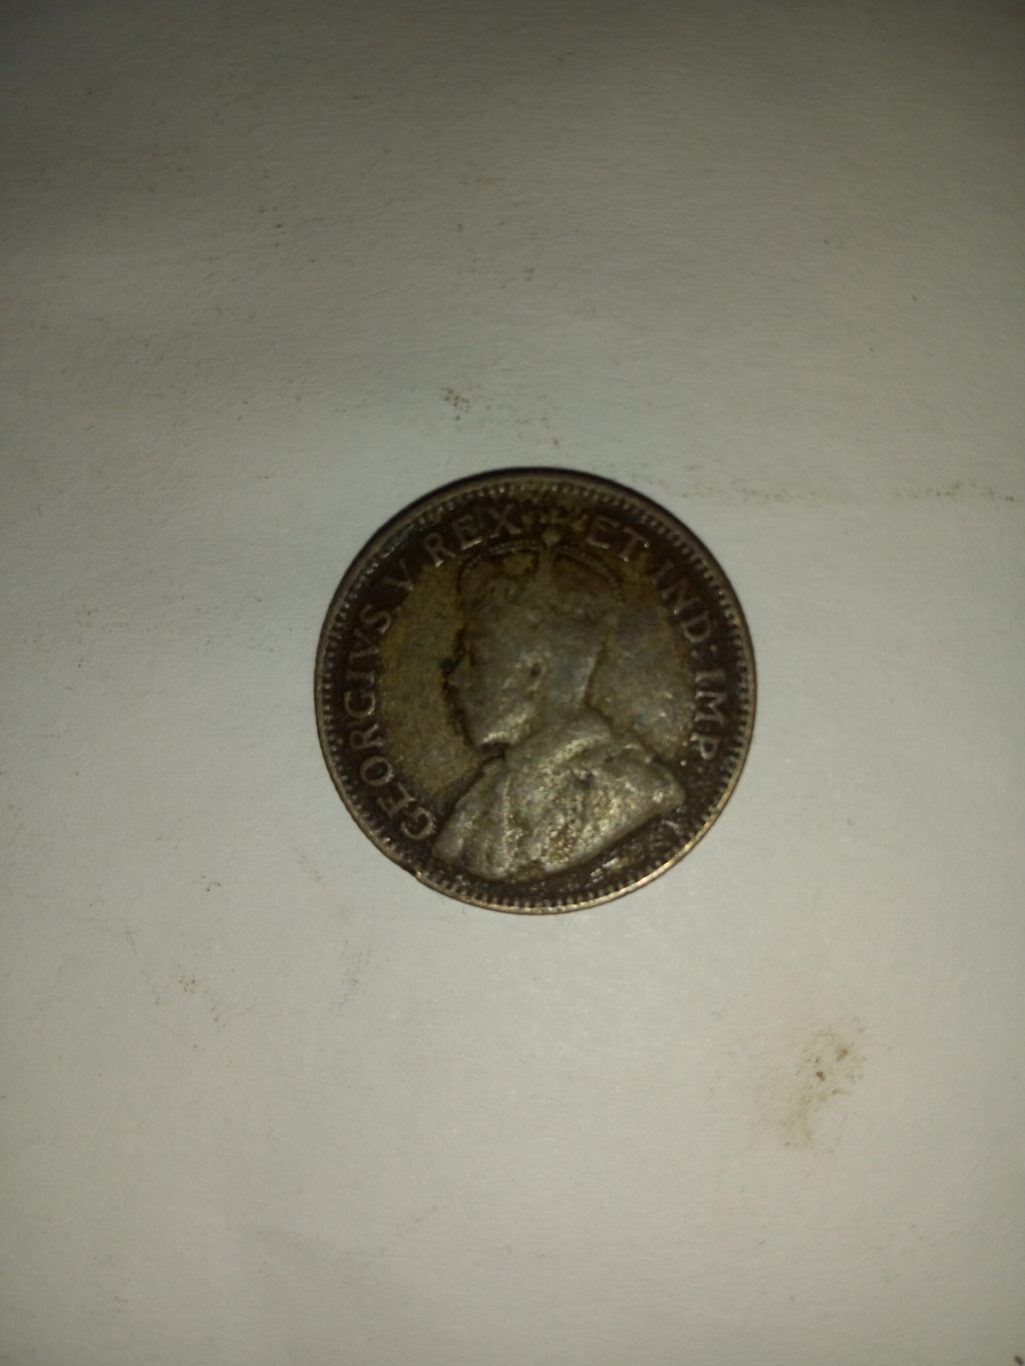 1921_georgivs V 50 half shilling